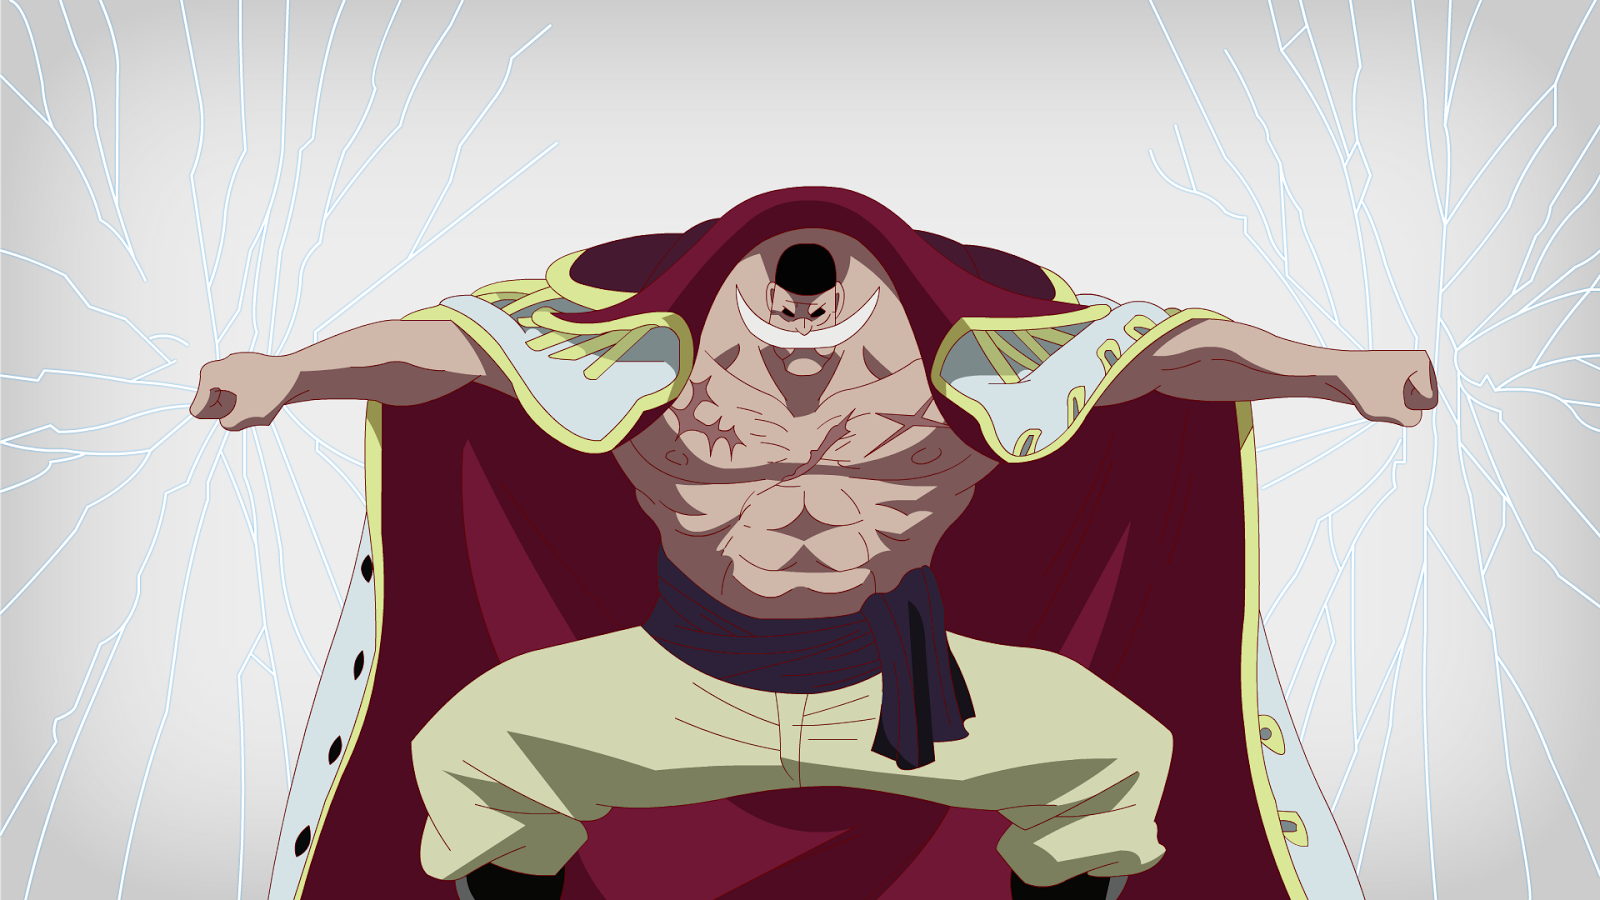 Edward Newgate Anime One Piece Image